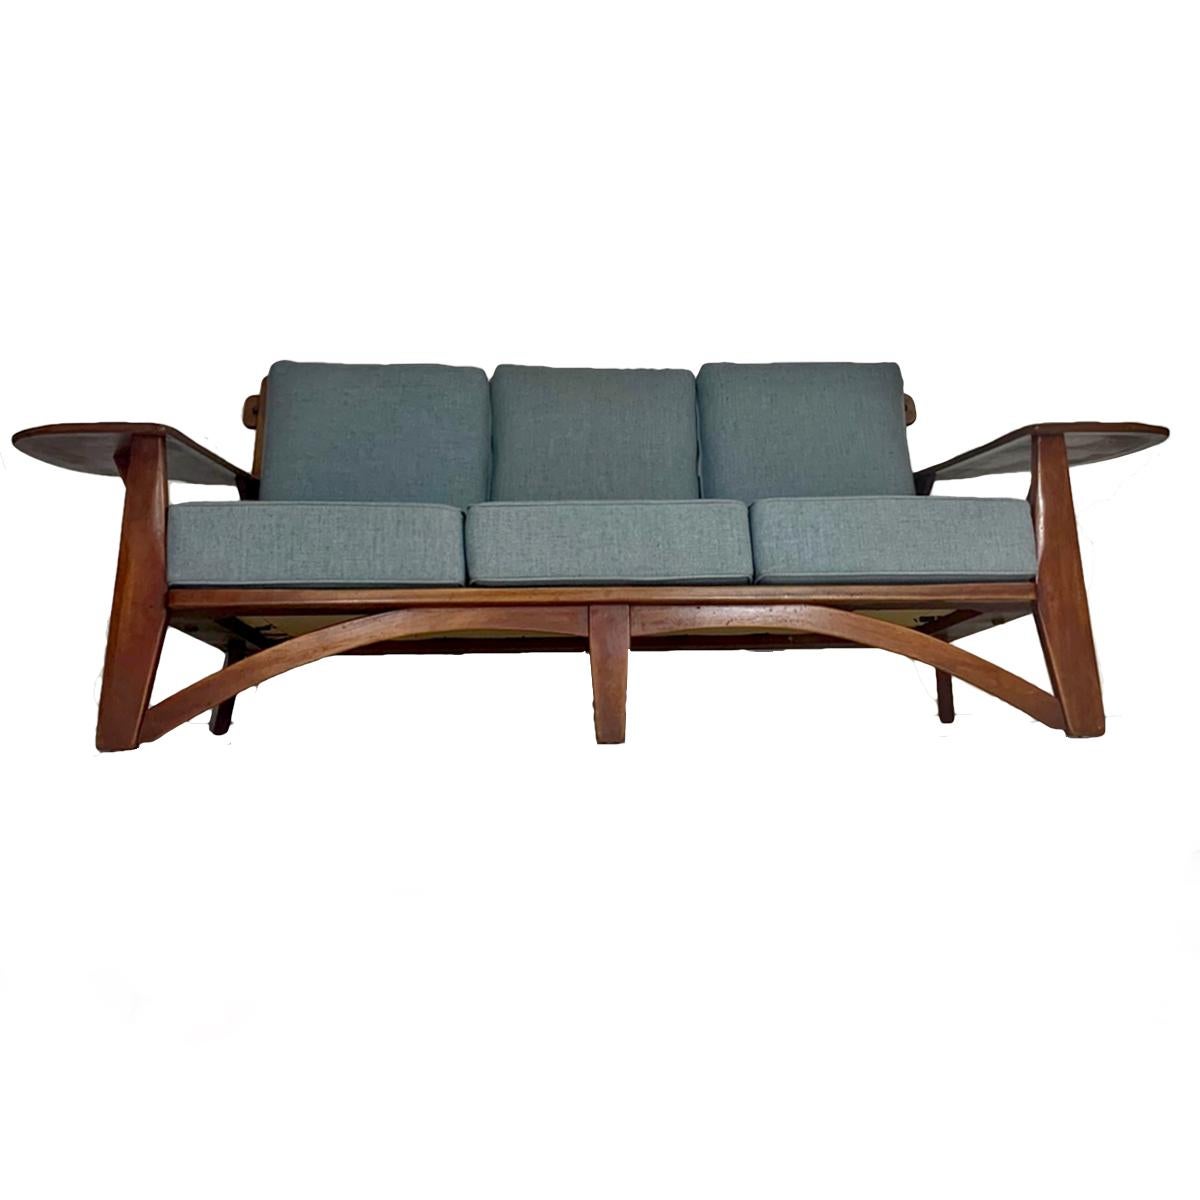 Impressive 1930s Cushman Maple Paddle Arm Sofa Designed by William DeVries 9